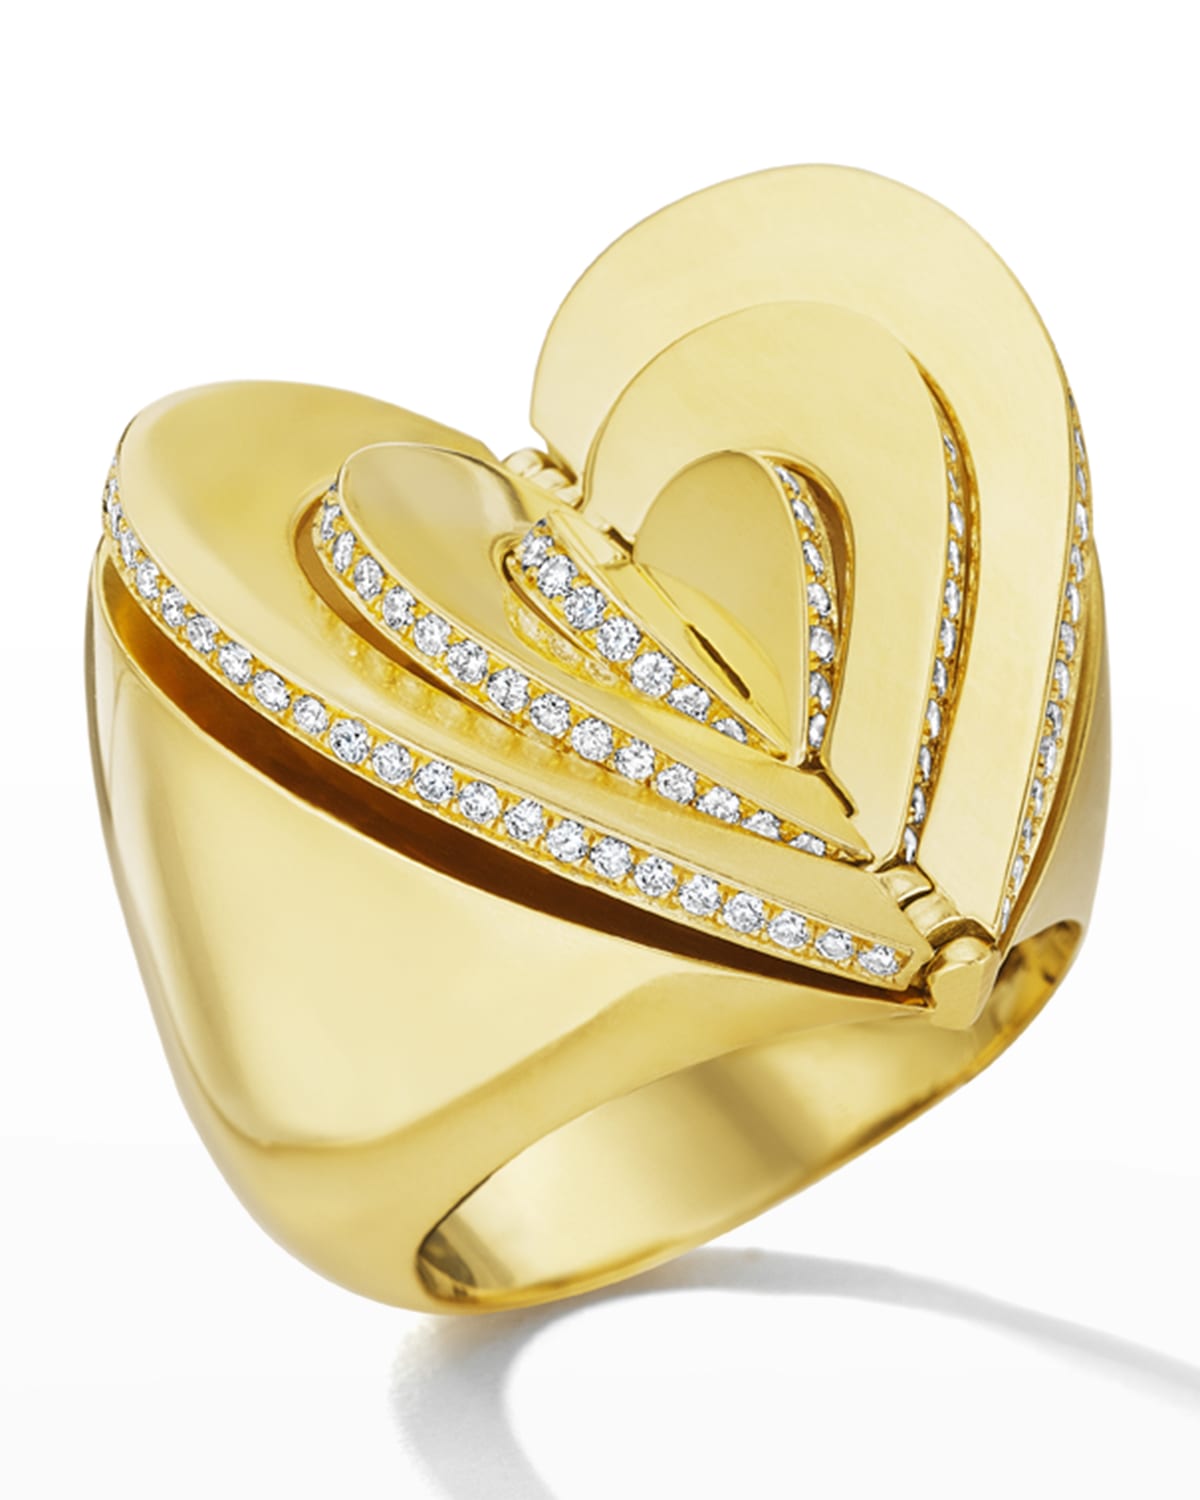 CADAR 18k Gold Diamond Heart Cocktail Ring, Size 7